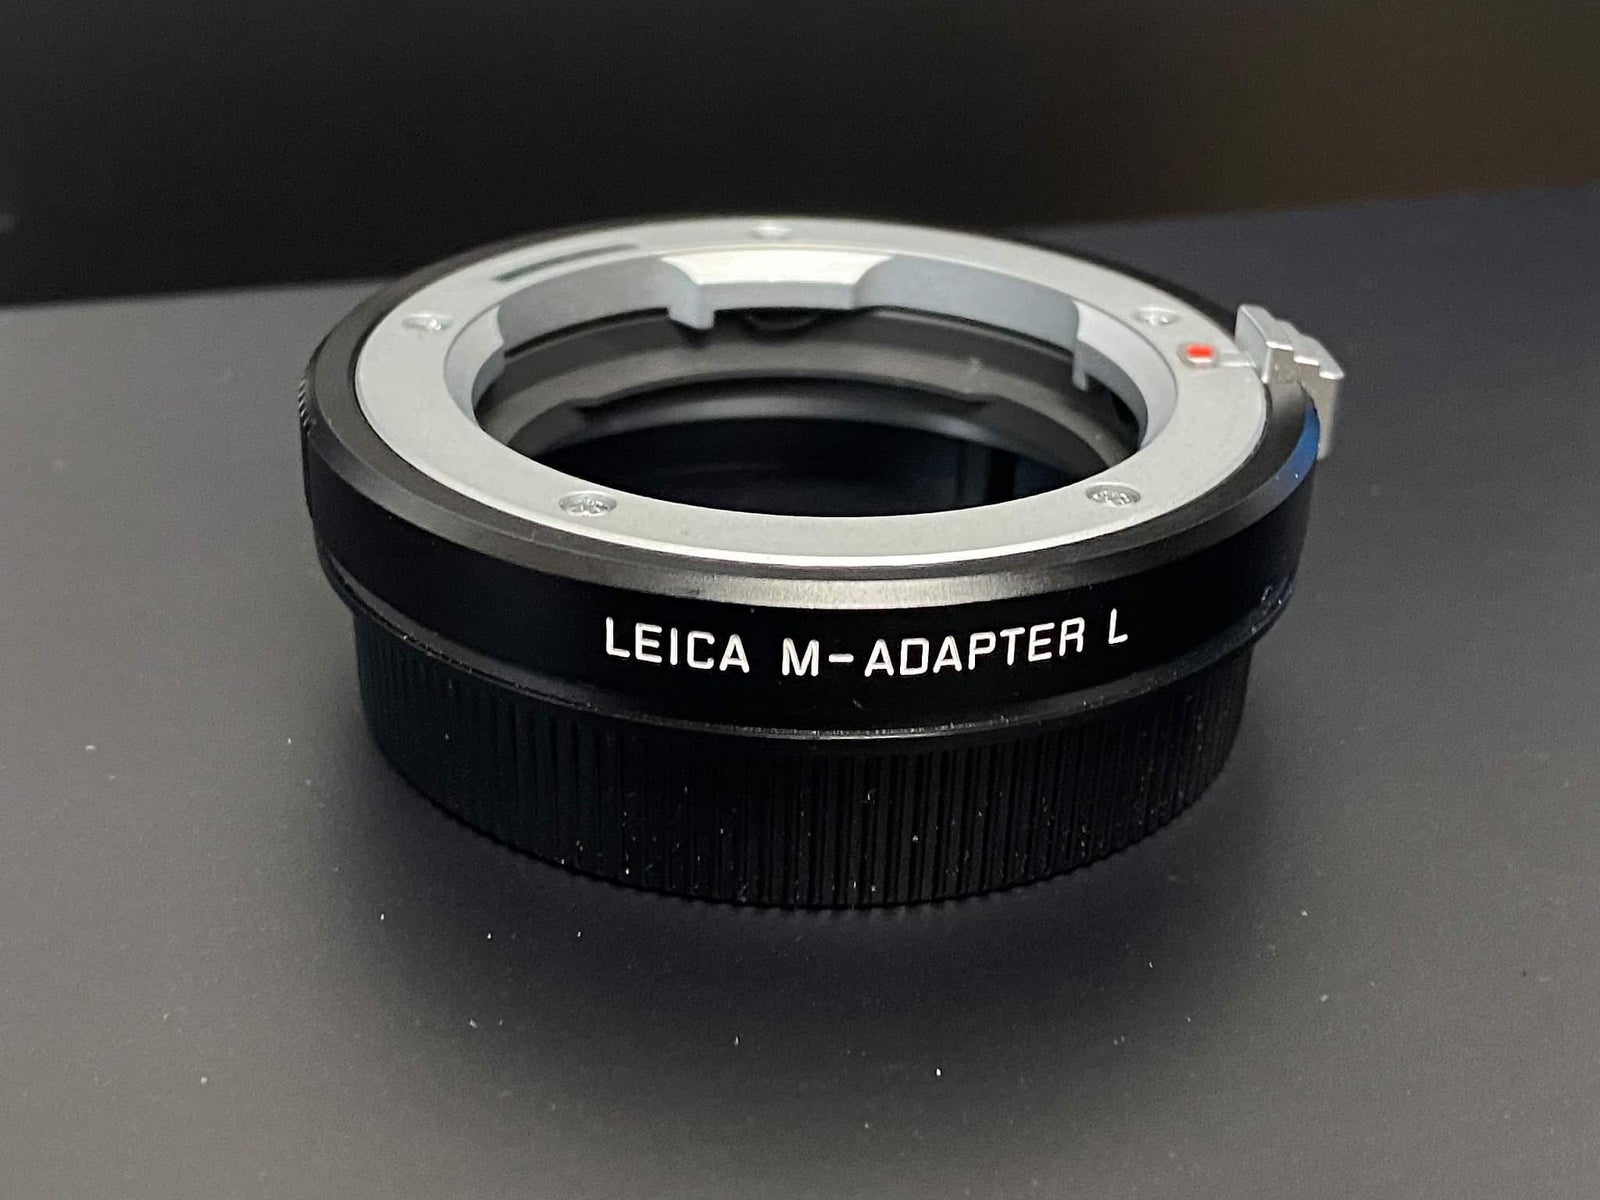 Leica, LEICA SL2 + 24-70 ASPH., 47 megapixels